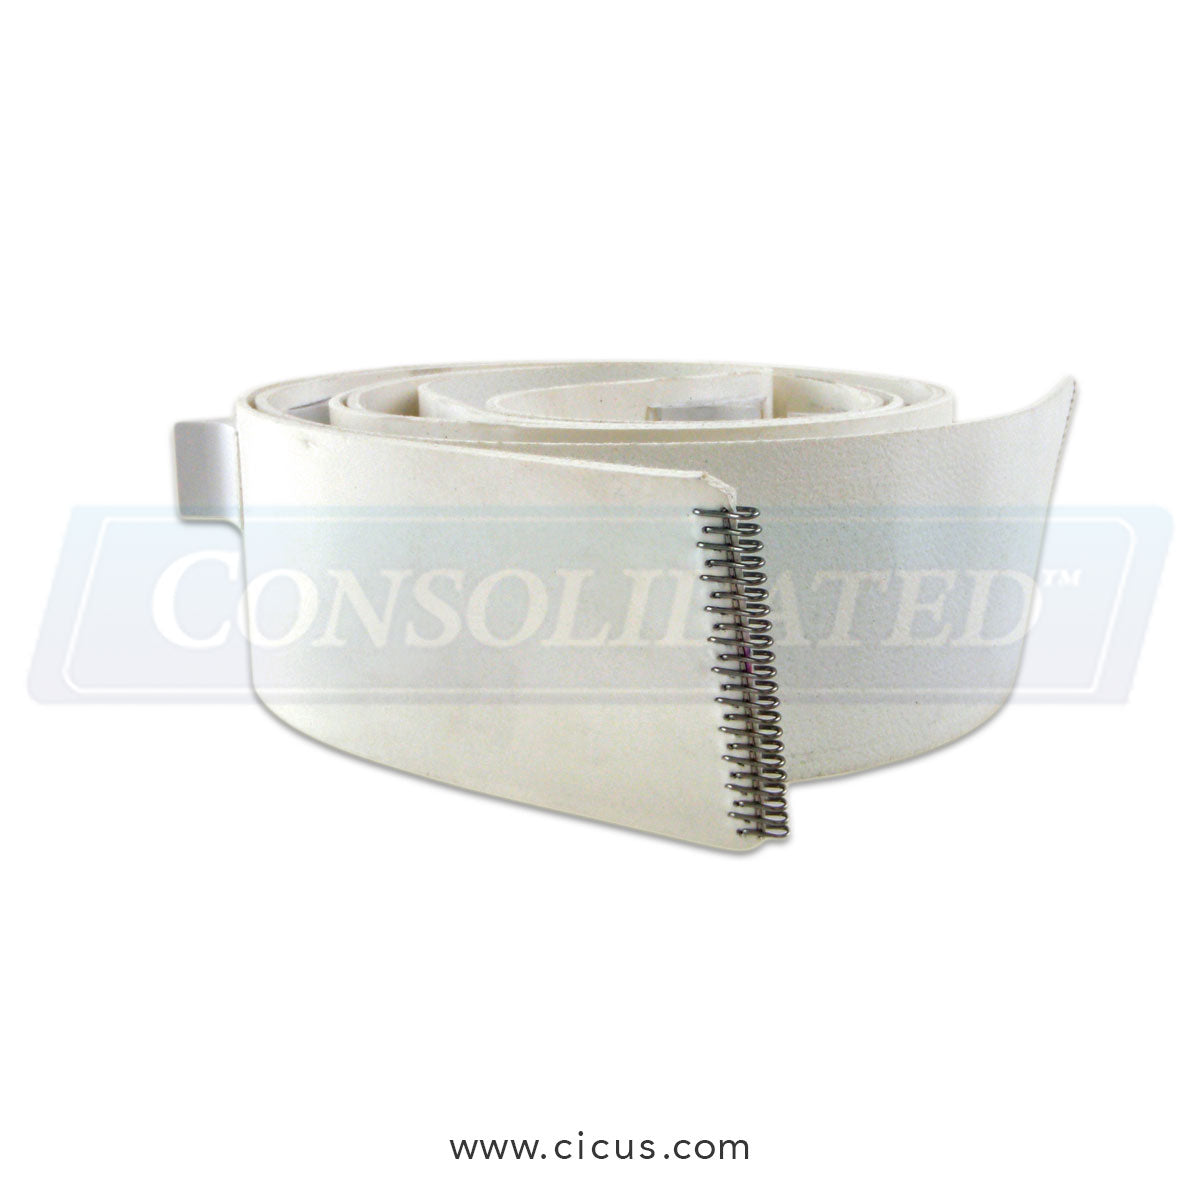 Chicago Dryer White Cleat Belt w/Pin - 3" x 120" [1003-925]